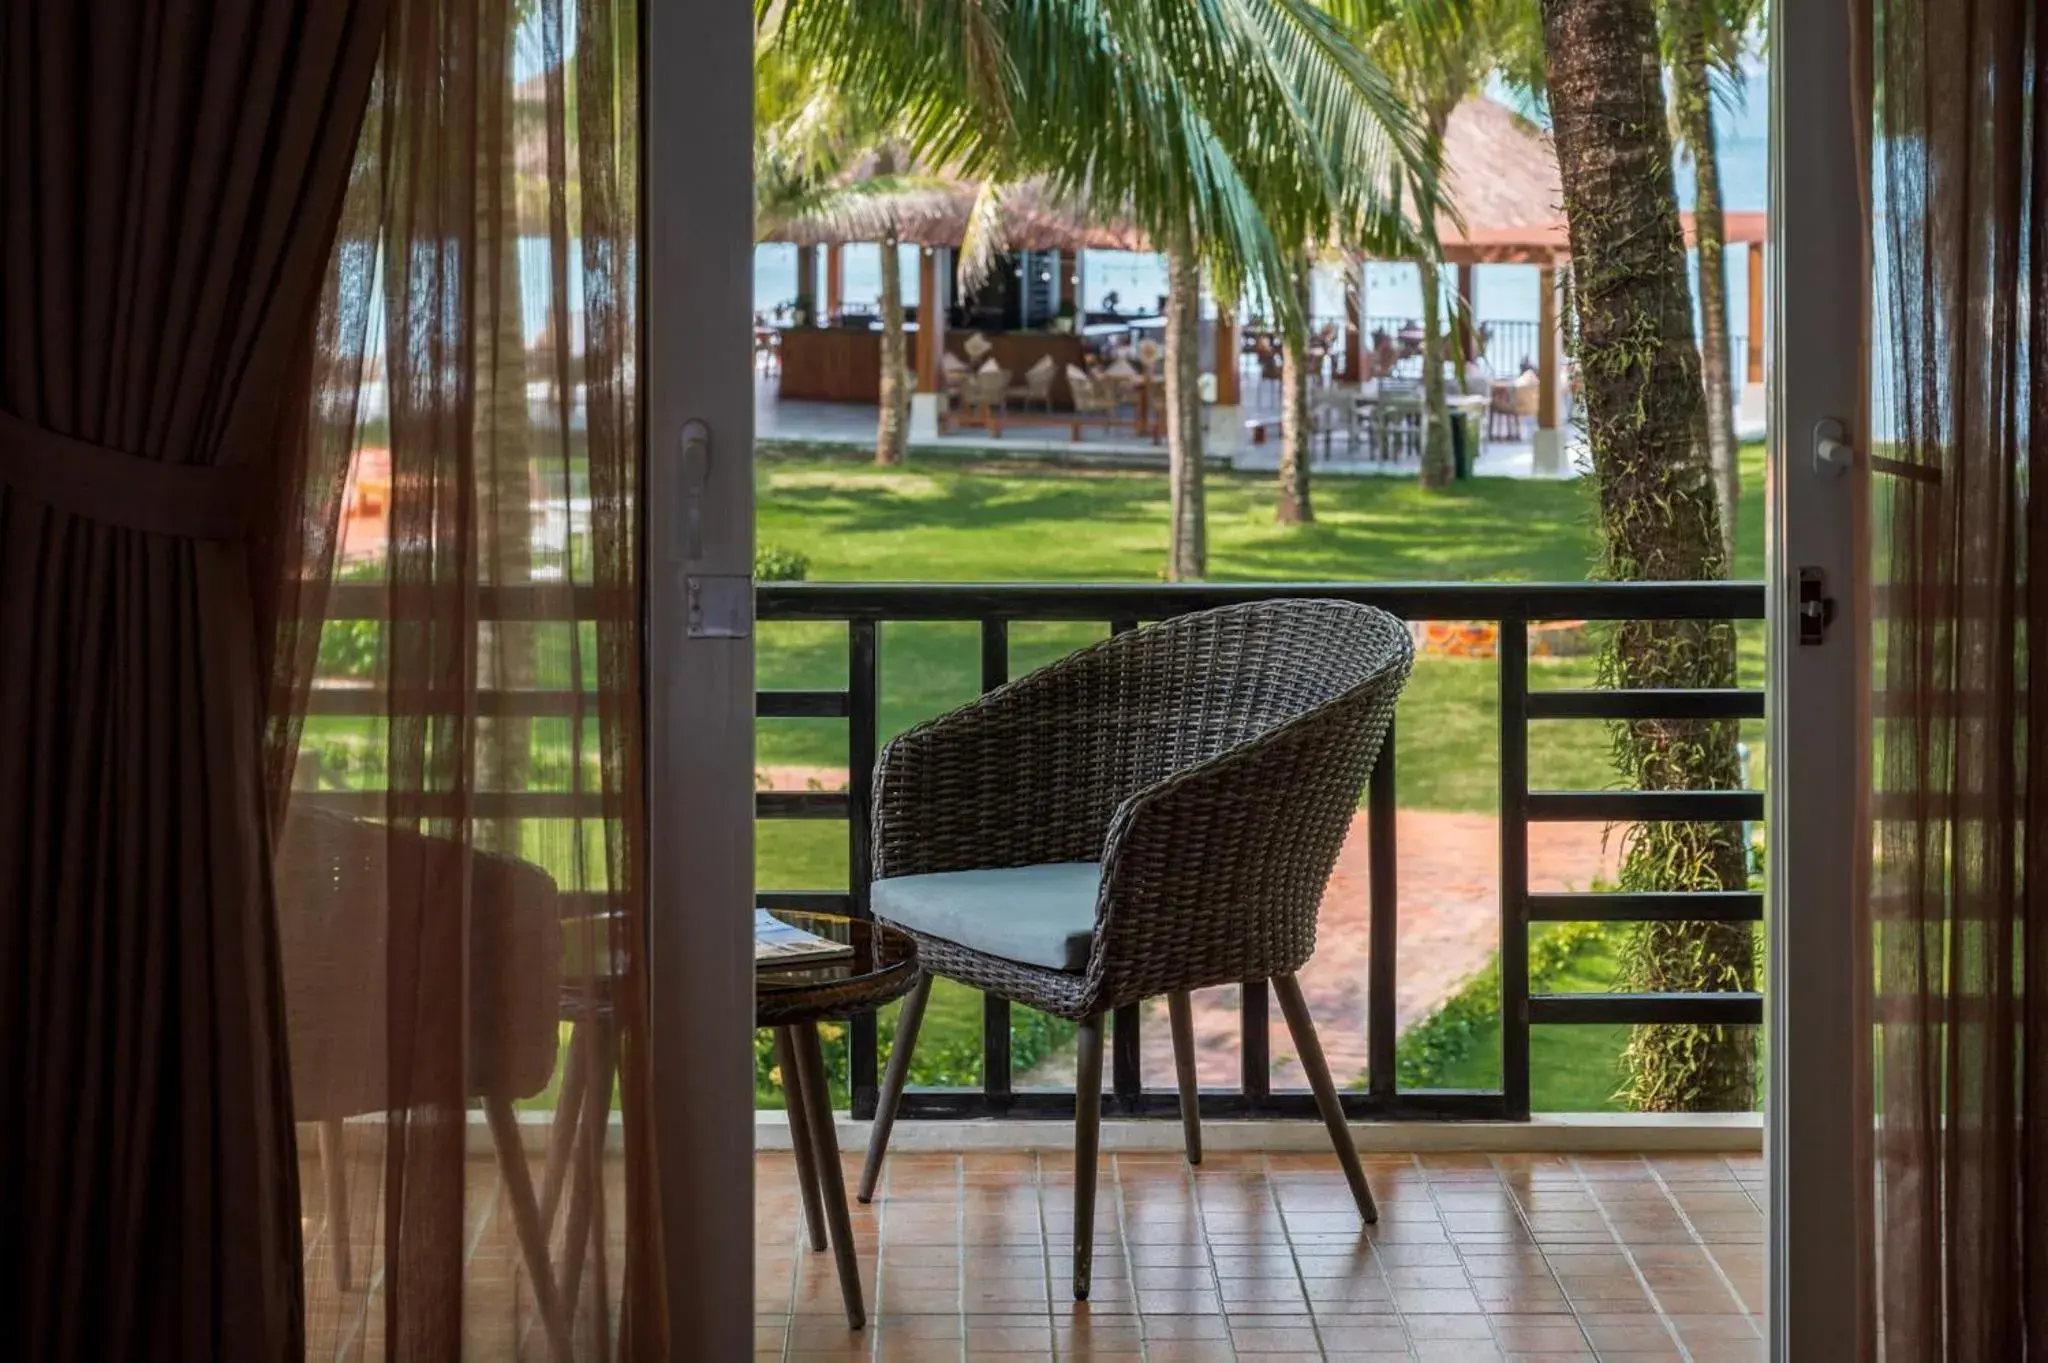 Balcony/Terrace in Famiana Resort & Spa